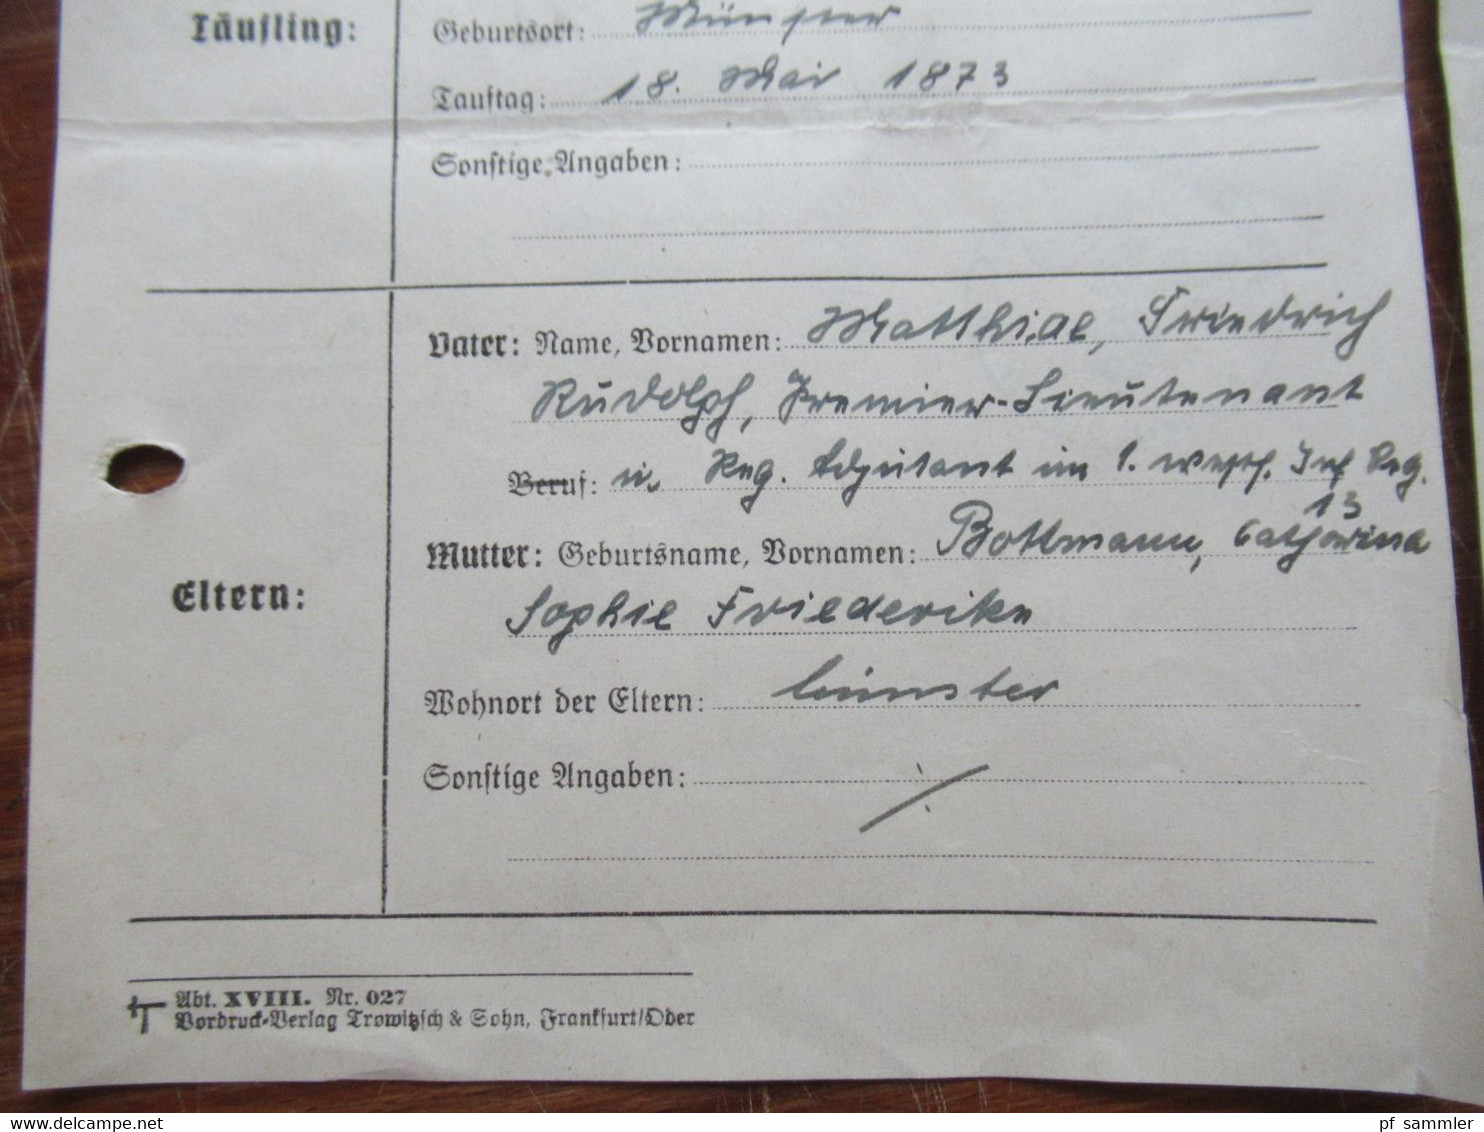 Dokumente Auszug Aus Taufregister Münster 1943 Jahrgang 1873 Vater Lieutnant Und Regimentsadjutant 1. Westf. Inf. Rgt. - Historical Documents